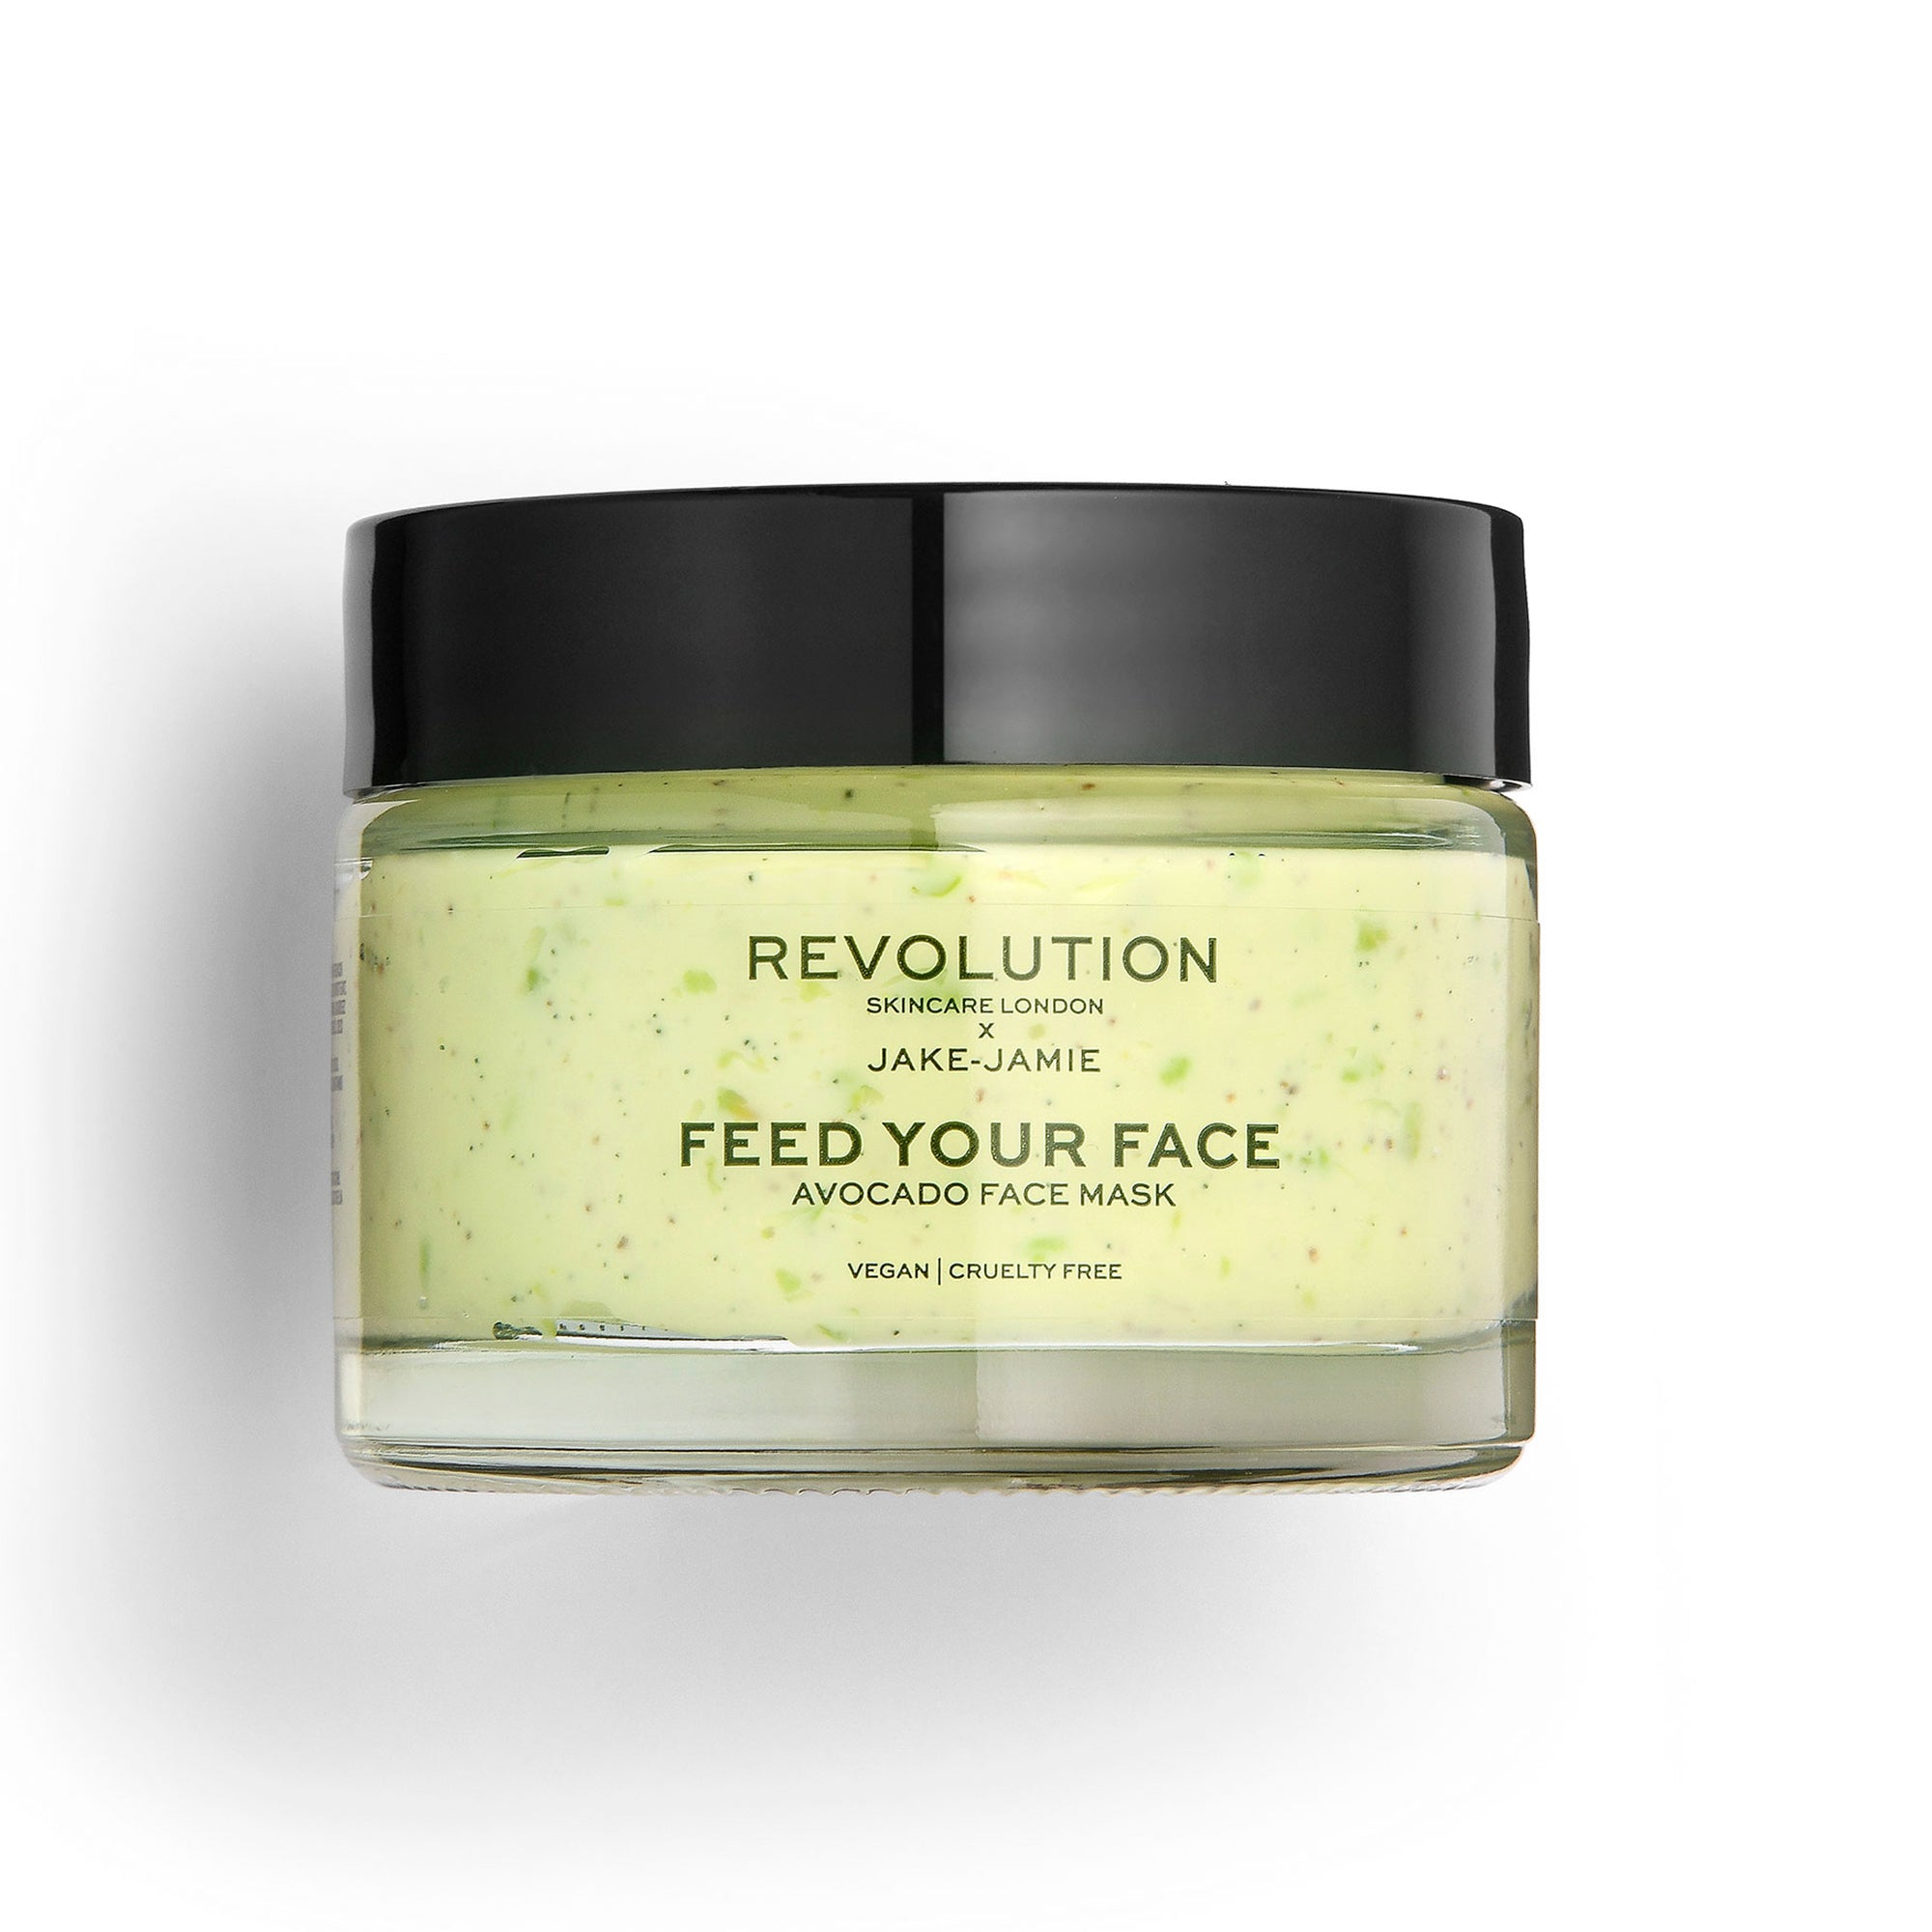 Revolution Skincare x Jake – Jamie Avocado Face Mask